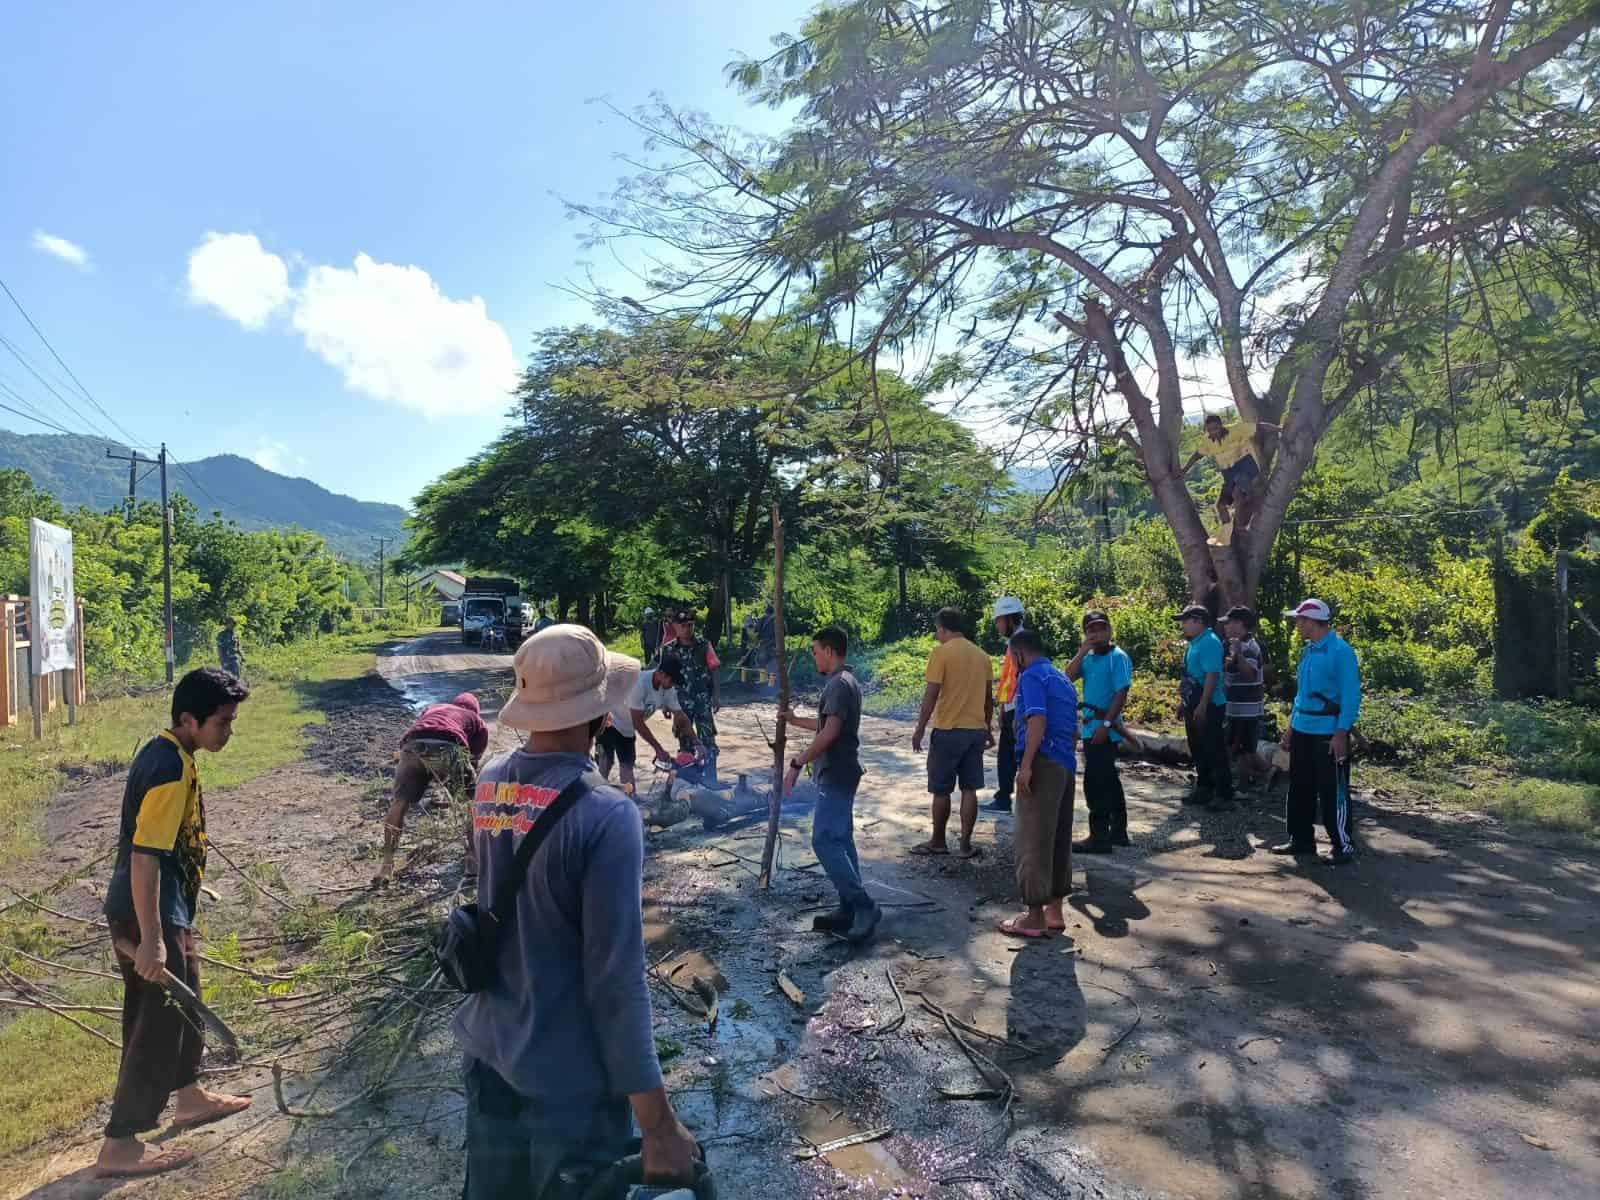 Koramil Jajaran Kodim 1628/SB, Bersama Masyarakat Gotong Royong Bersihkan dan Perbaiki Jalan